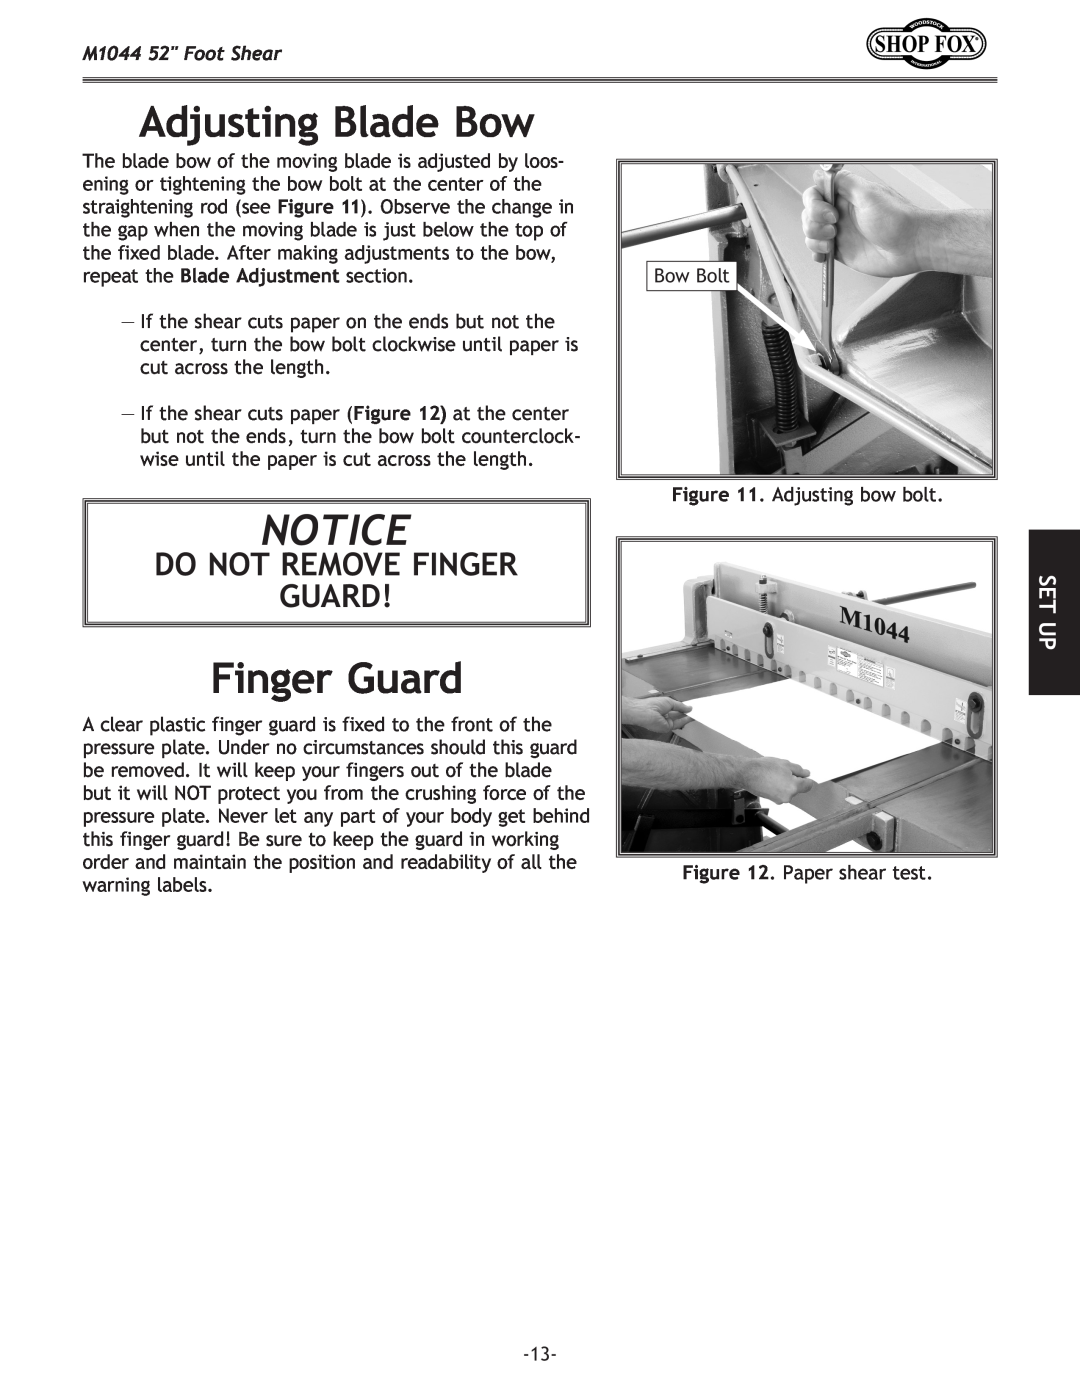 Woodstock manual Adjusting Blade Bow, Do Not Remove Finger Guard, Set Up, M1044 52 Foot Shear 